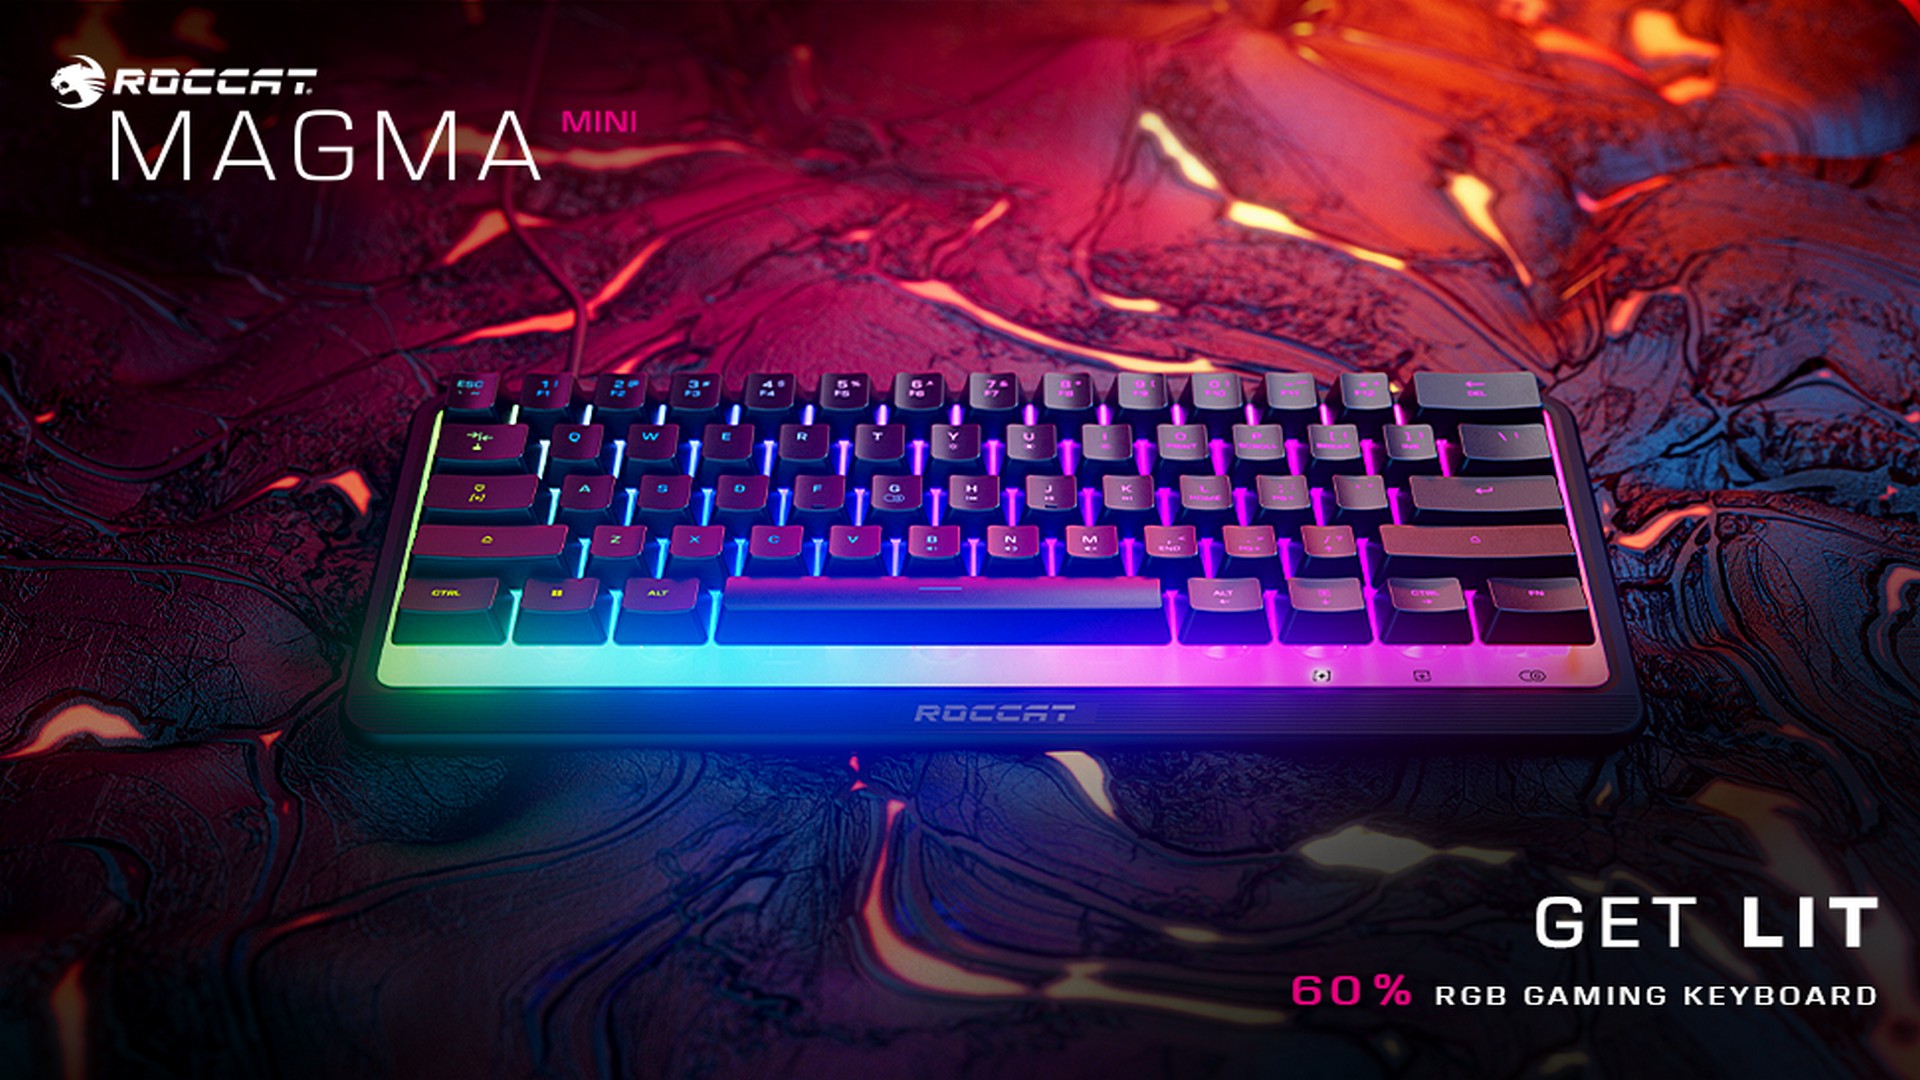 Get Lit With Stunning RGB Lighting & ROCCAT’S Vibrant Magma Mini – The Award-Winning PC Peripheral Brand’s New 60% Sized RGB Membrane Gaming Keyboard